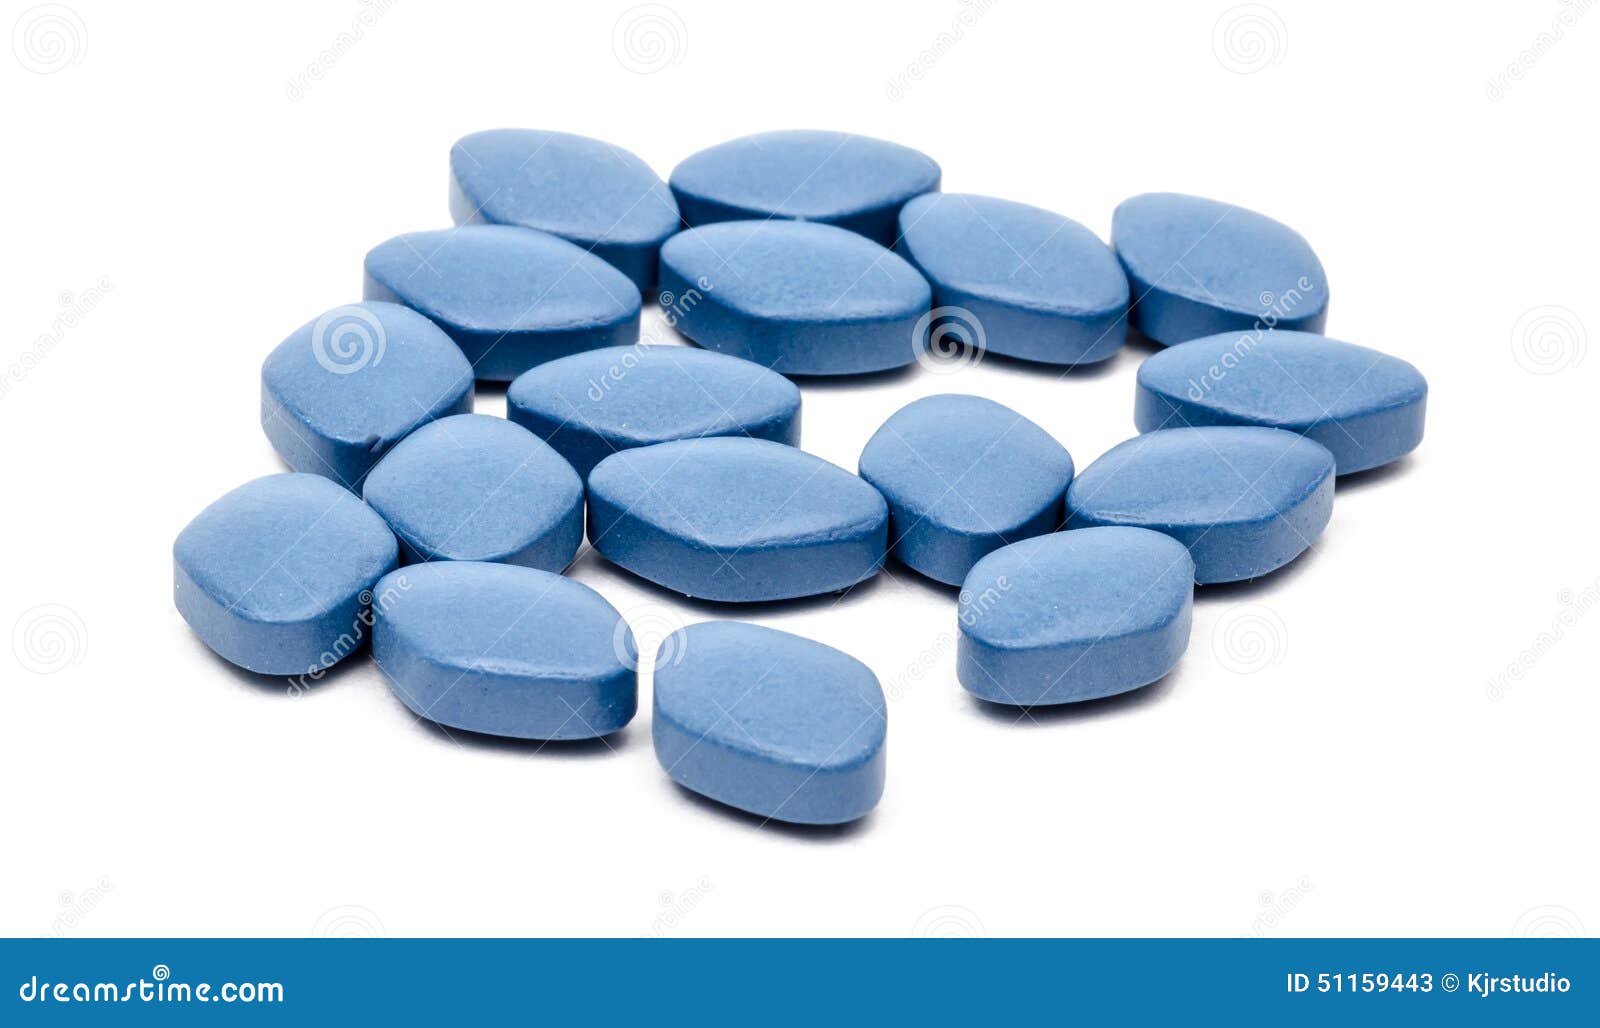 viagra generic blue pills